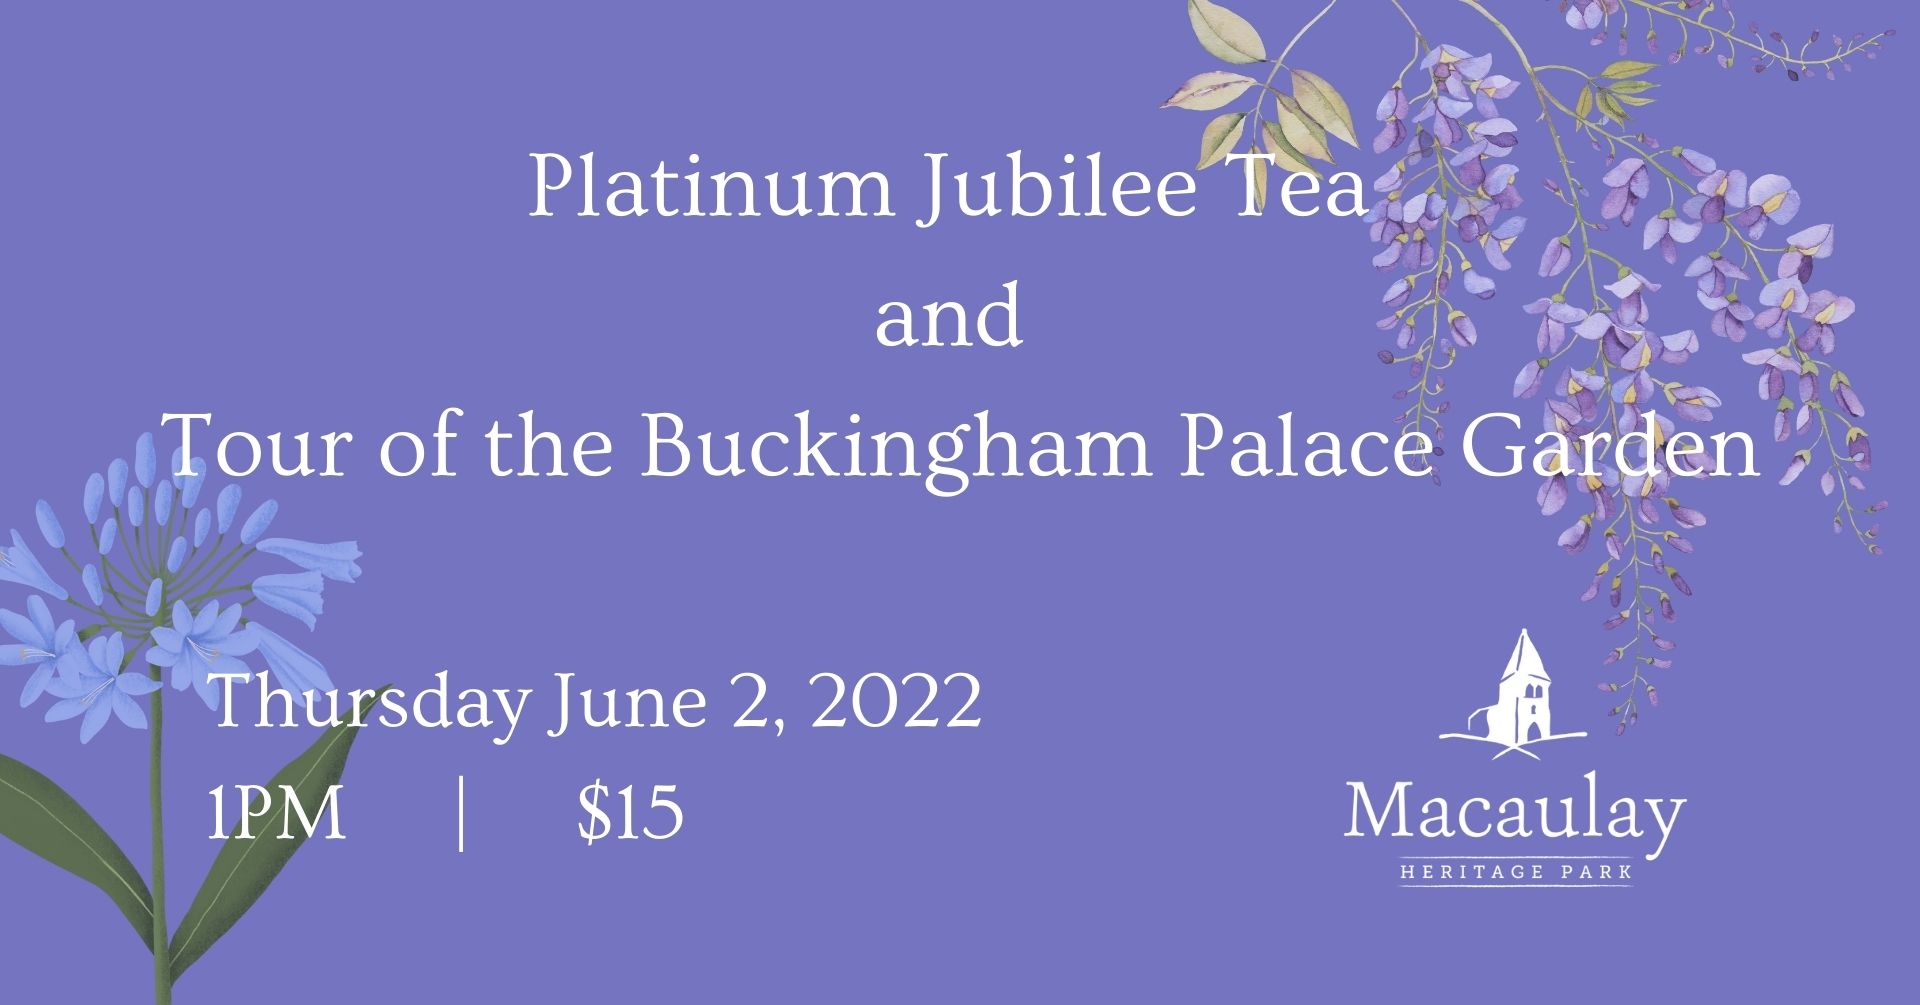 Platinum Jubilee Tea and Tour of the Buckingham Palace Garden